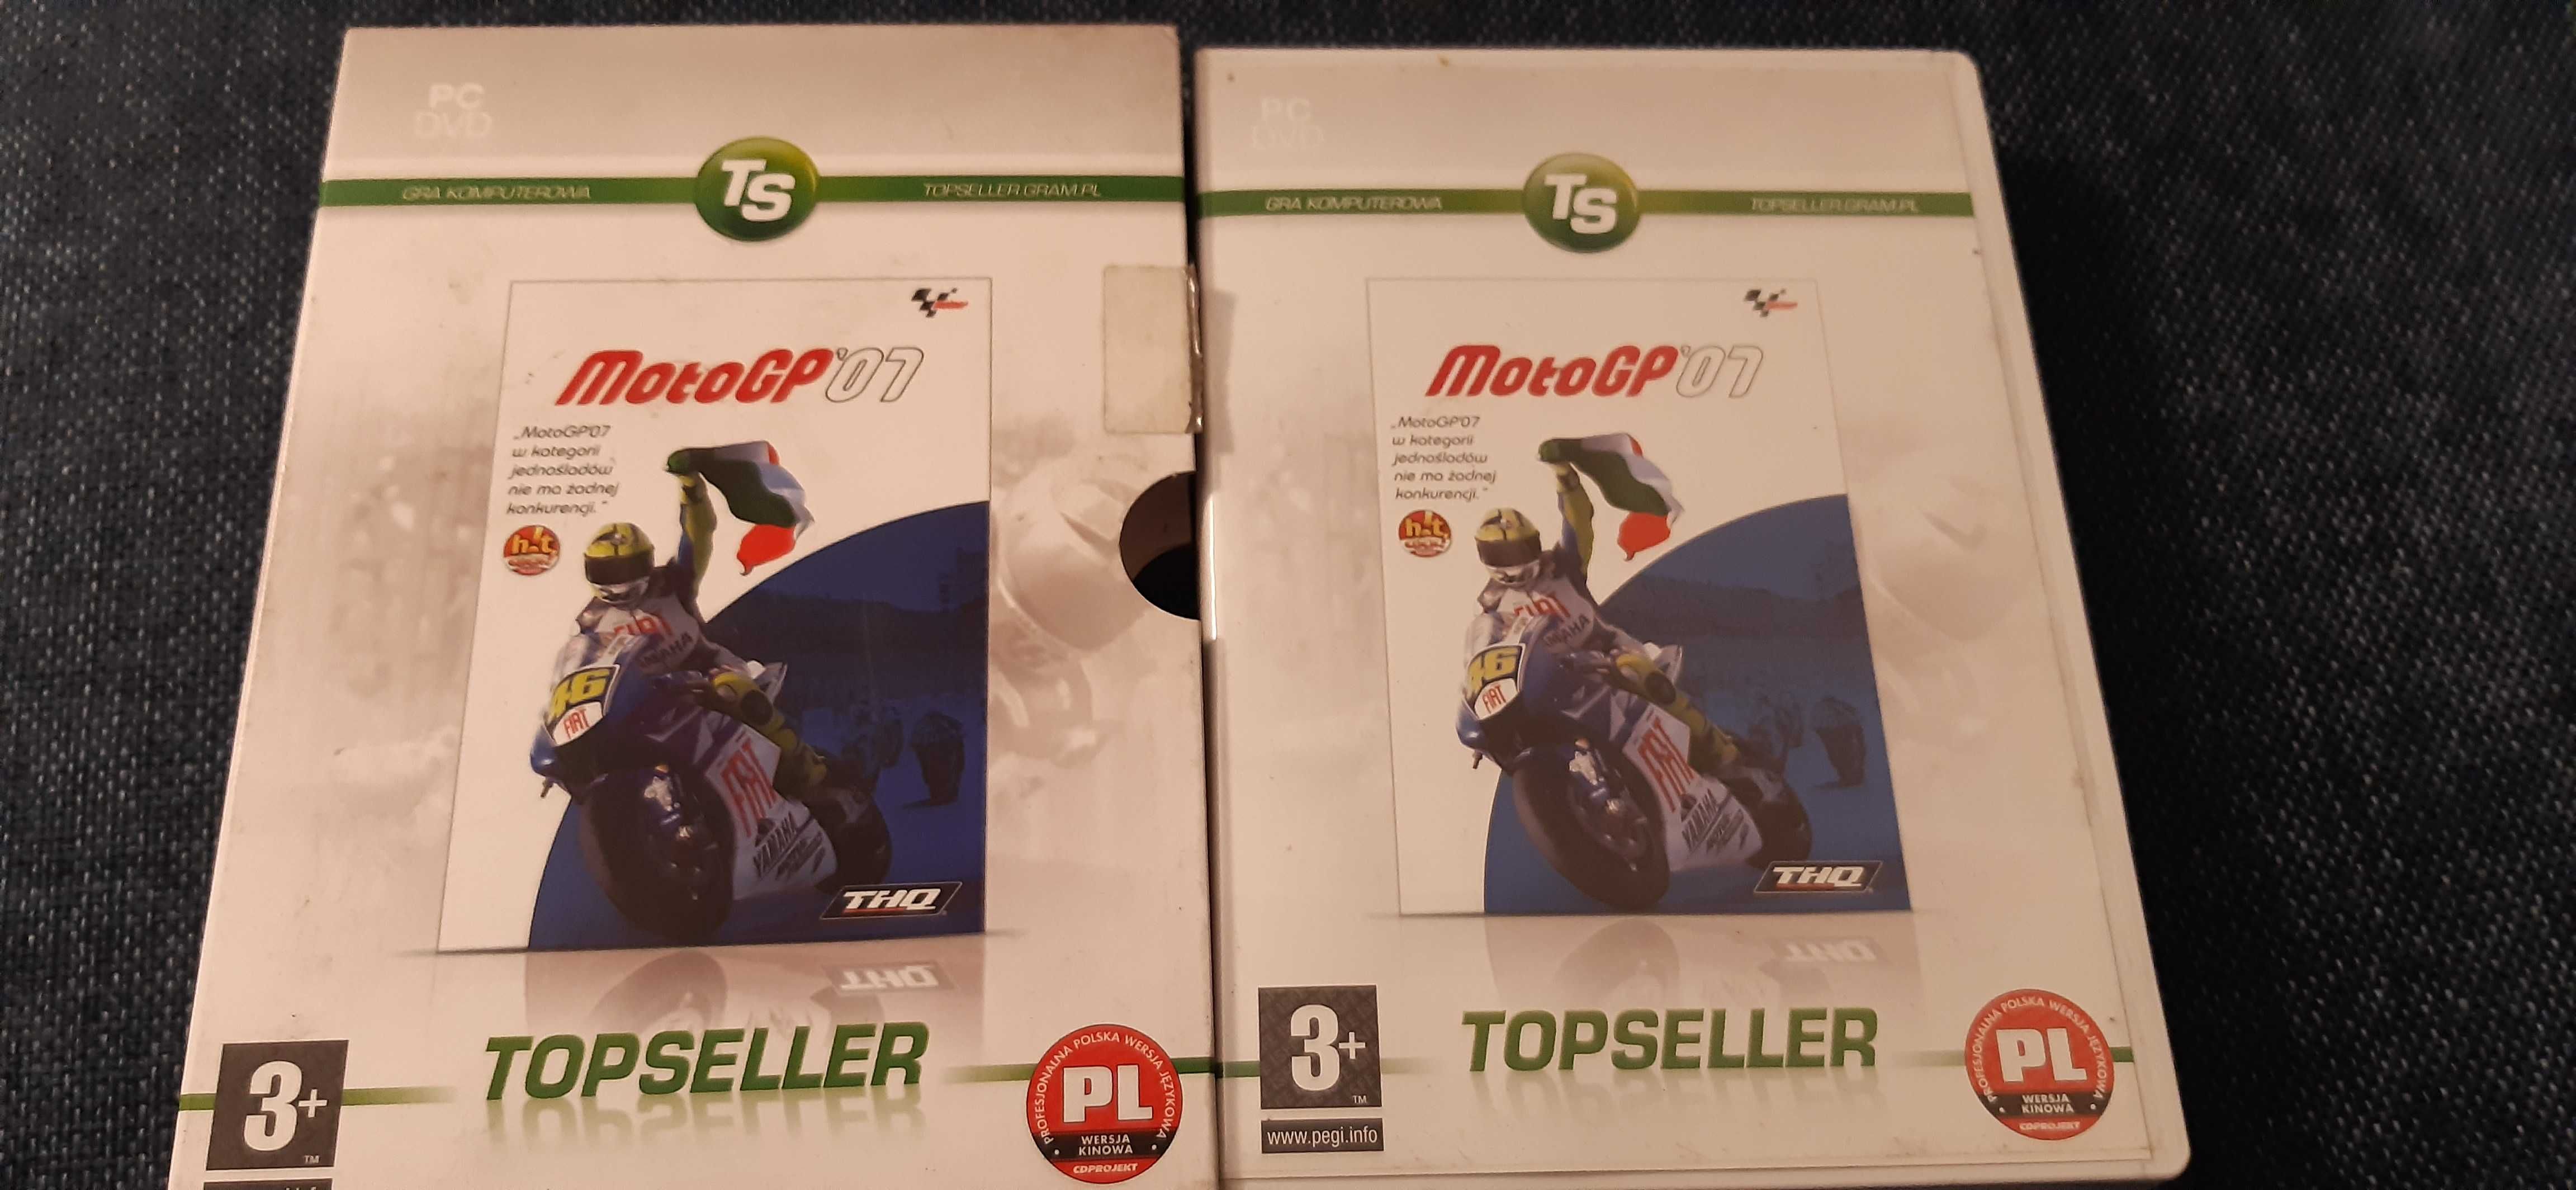 Moto GP 07 gra PC DVD-ROM wersja pudełkowa retro pc